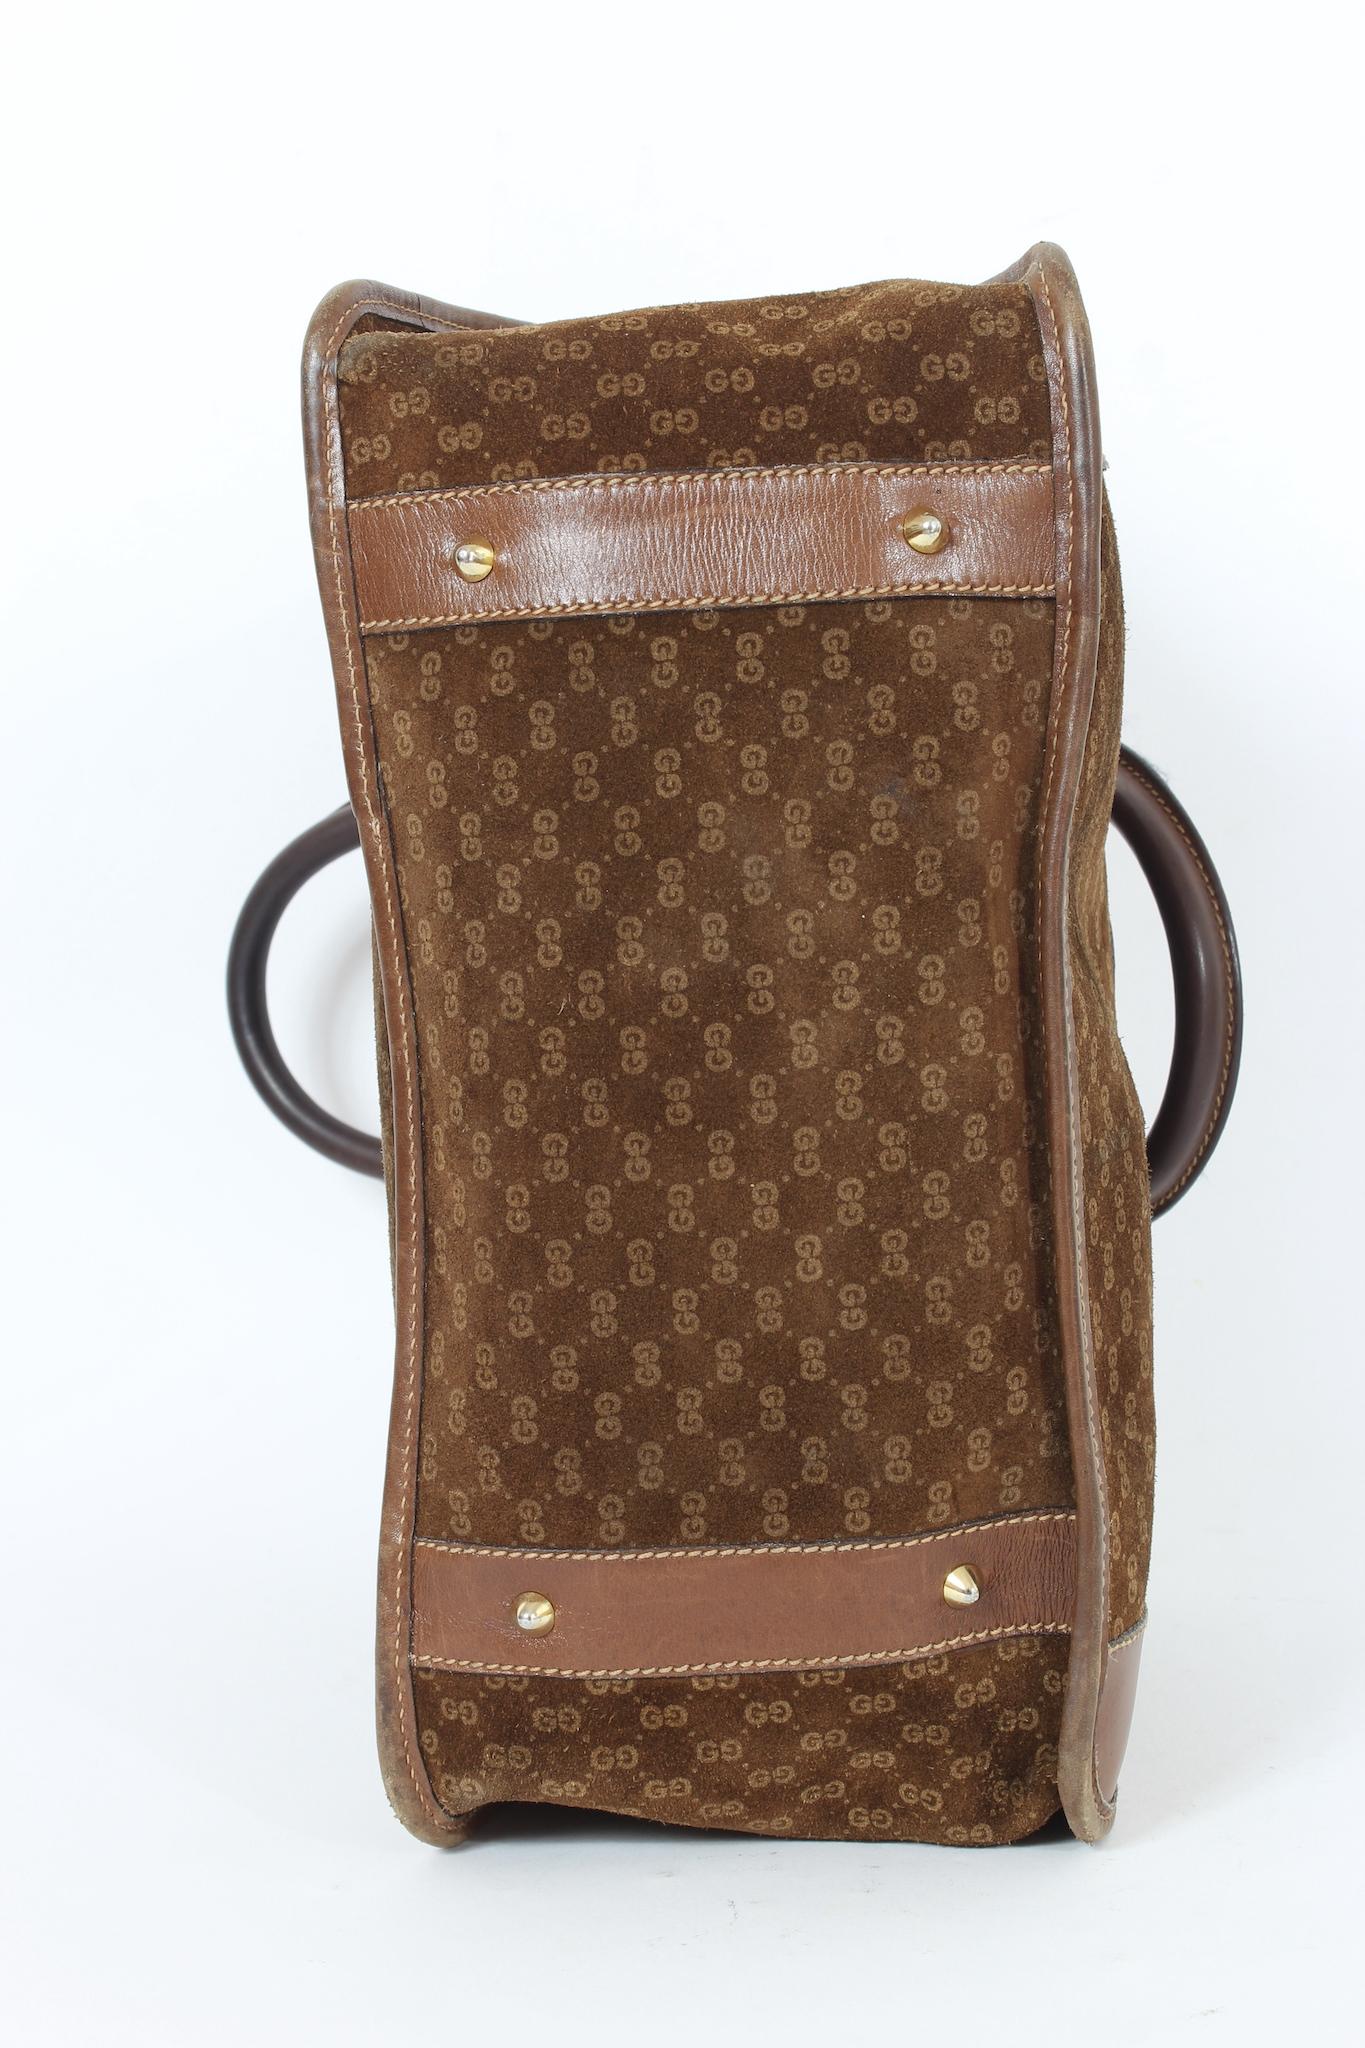 Gucci Brown Suede Leather Monogram Vintage Bag 70s For Sale 3